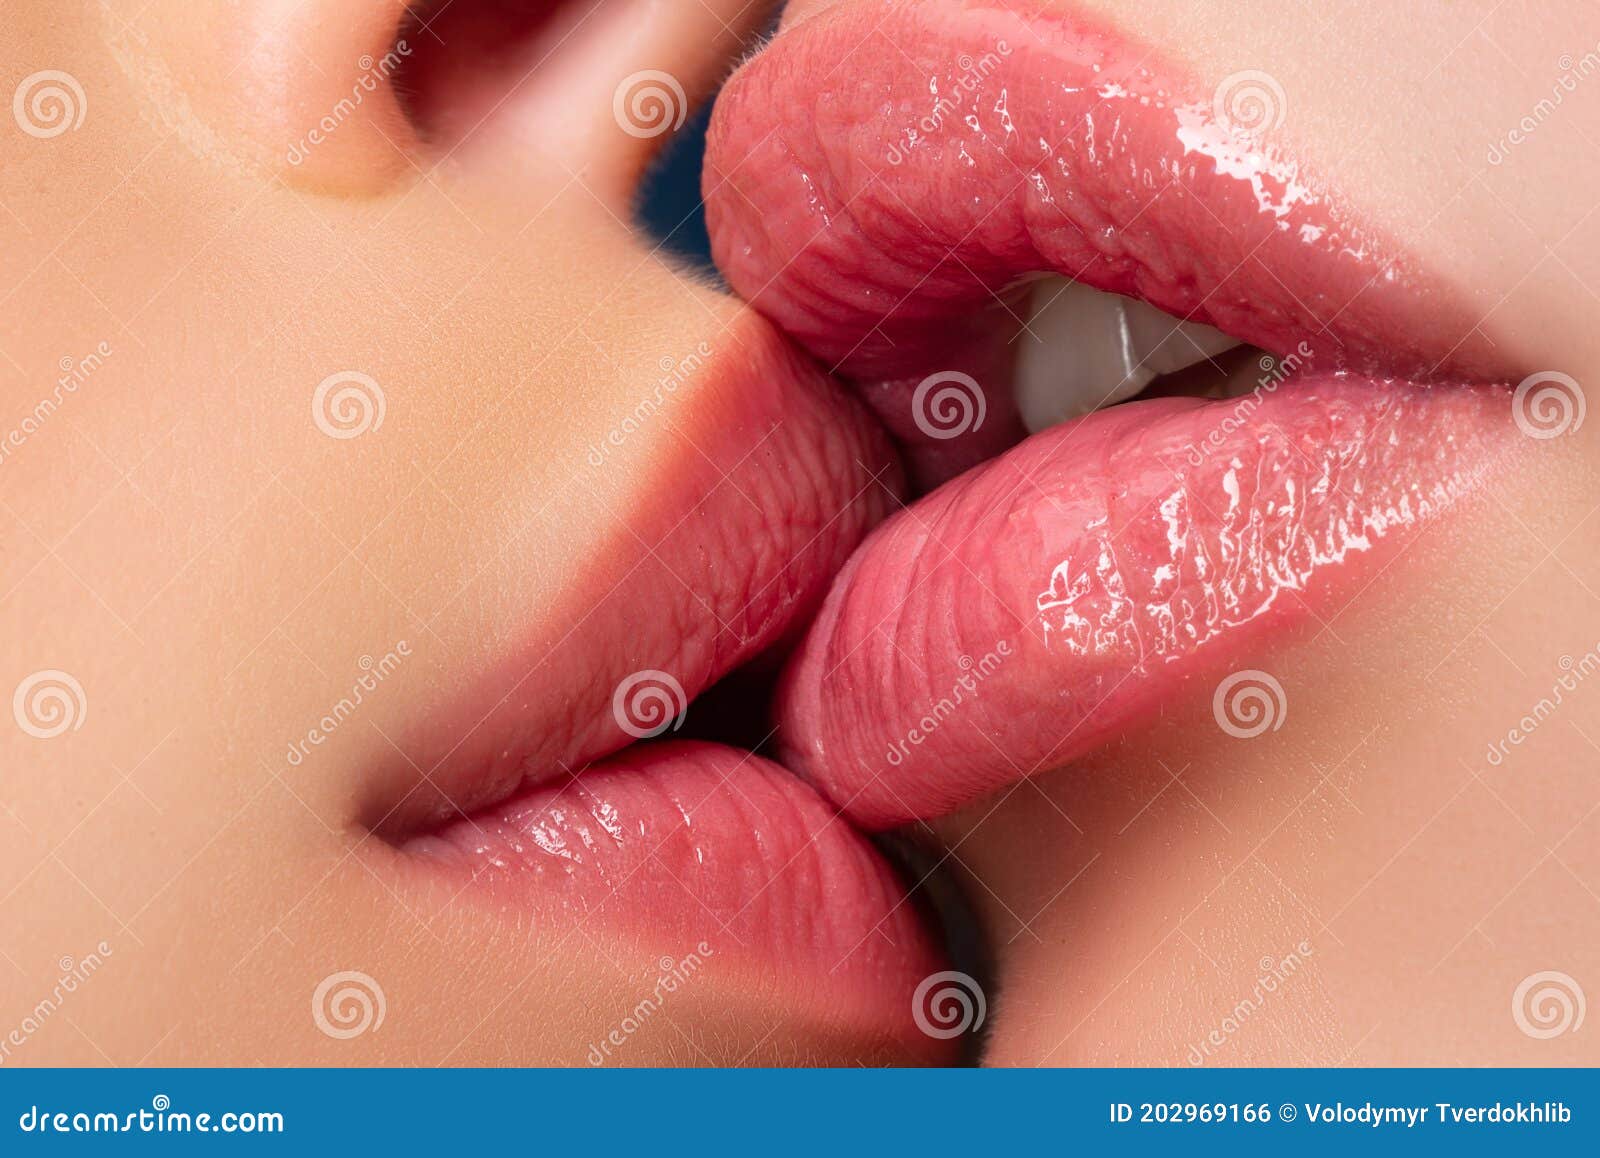 Kiss romantic tongue 11 Women